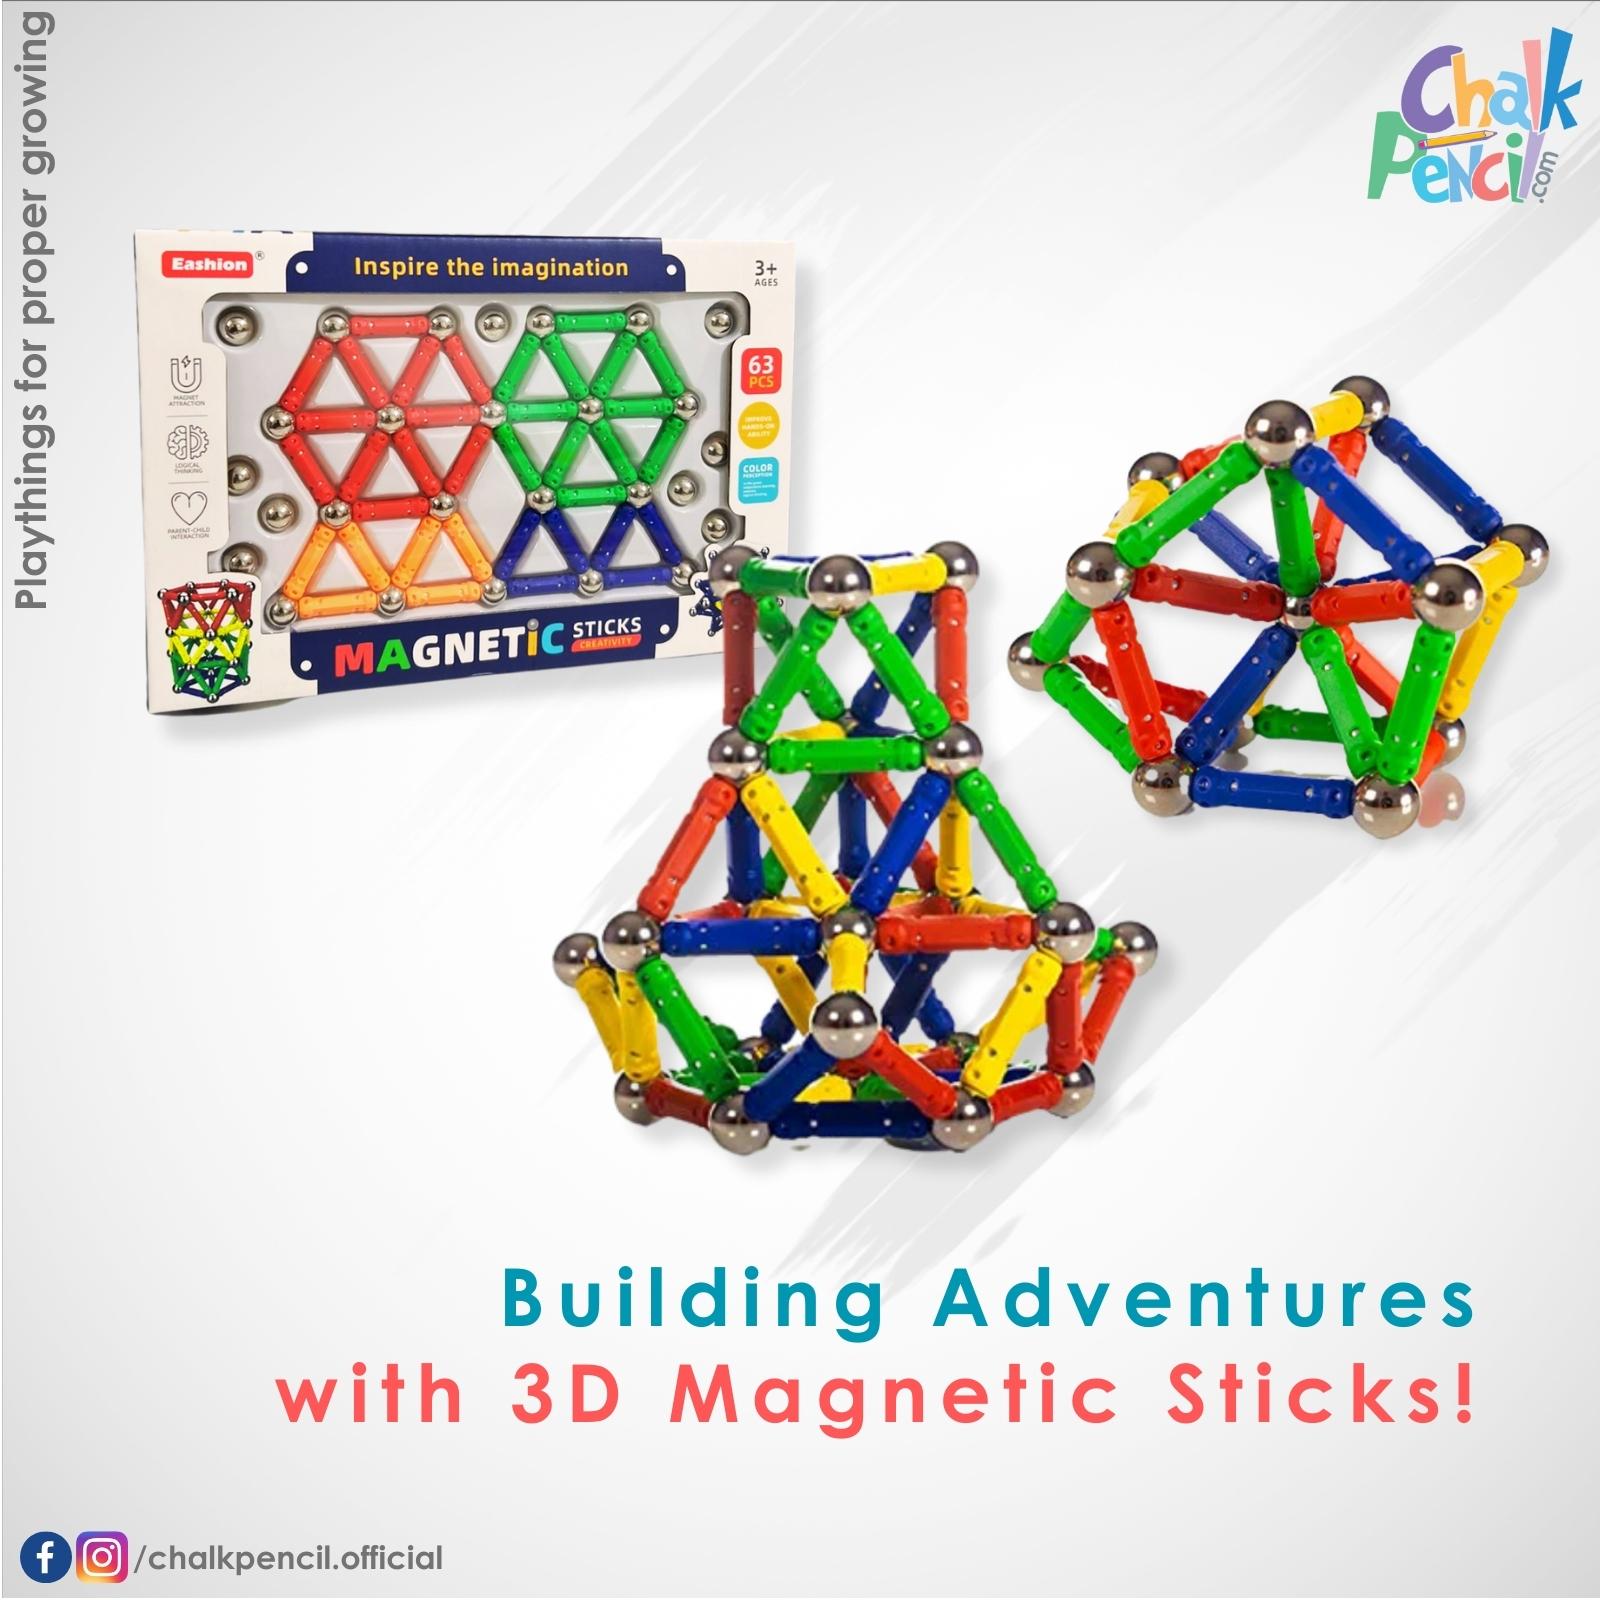 3D Magnetic Sticks 63 Pcs